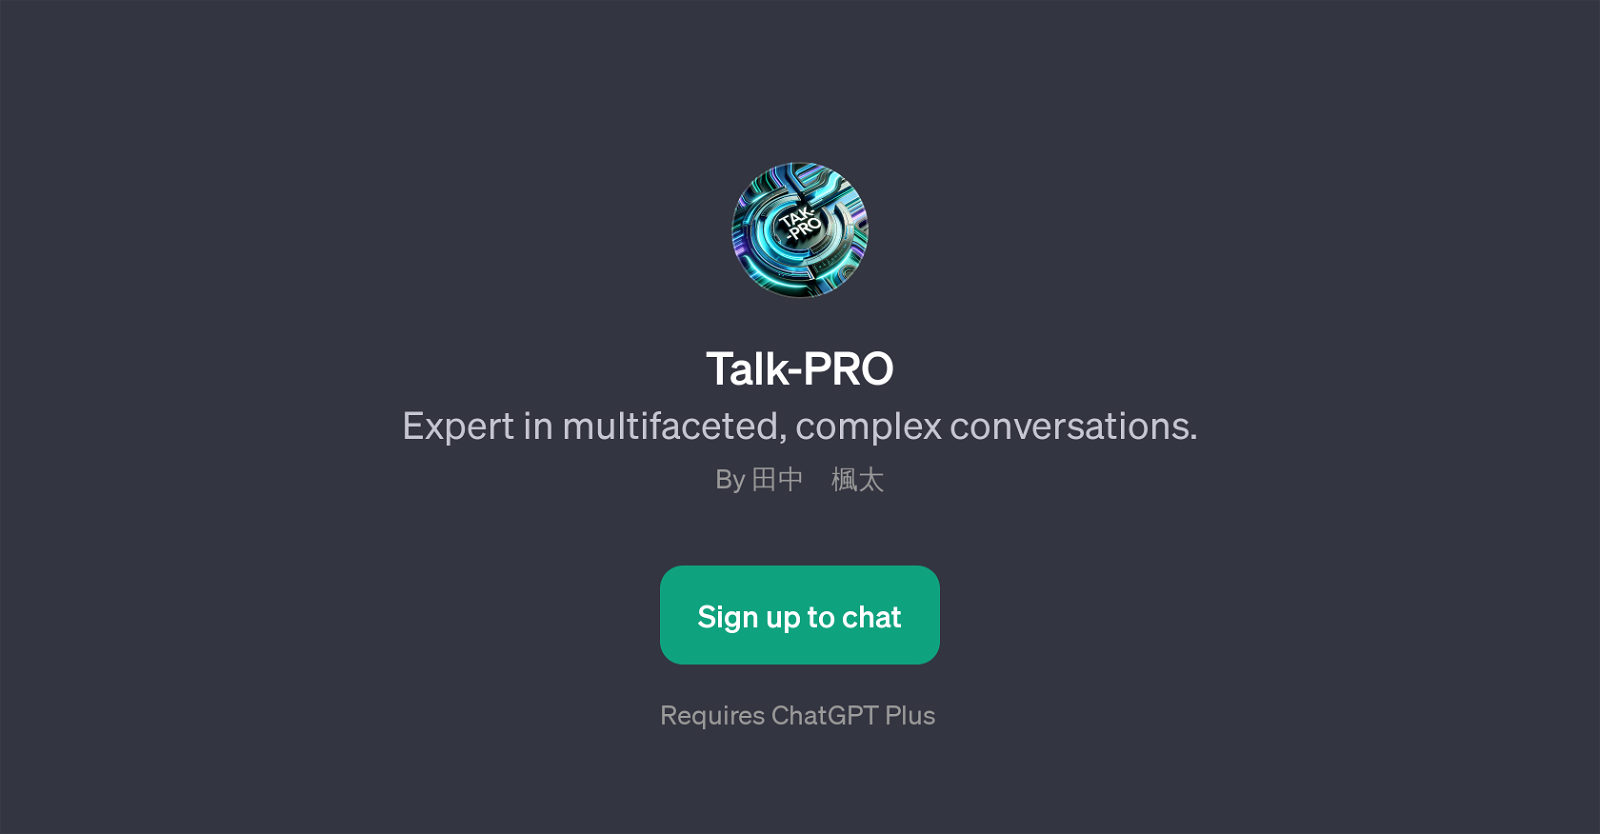 Talk-PRO website